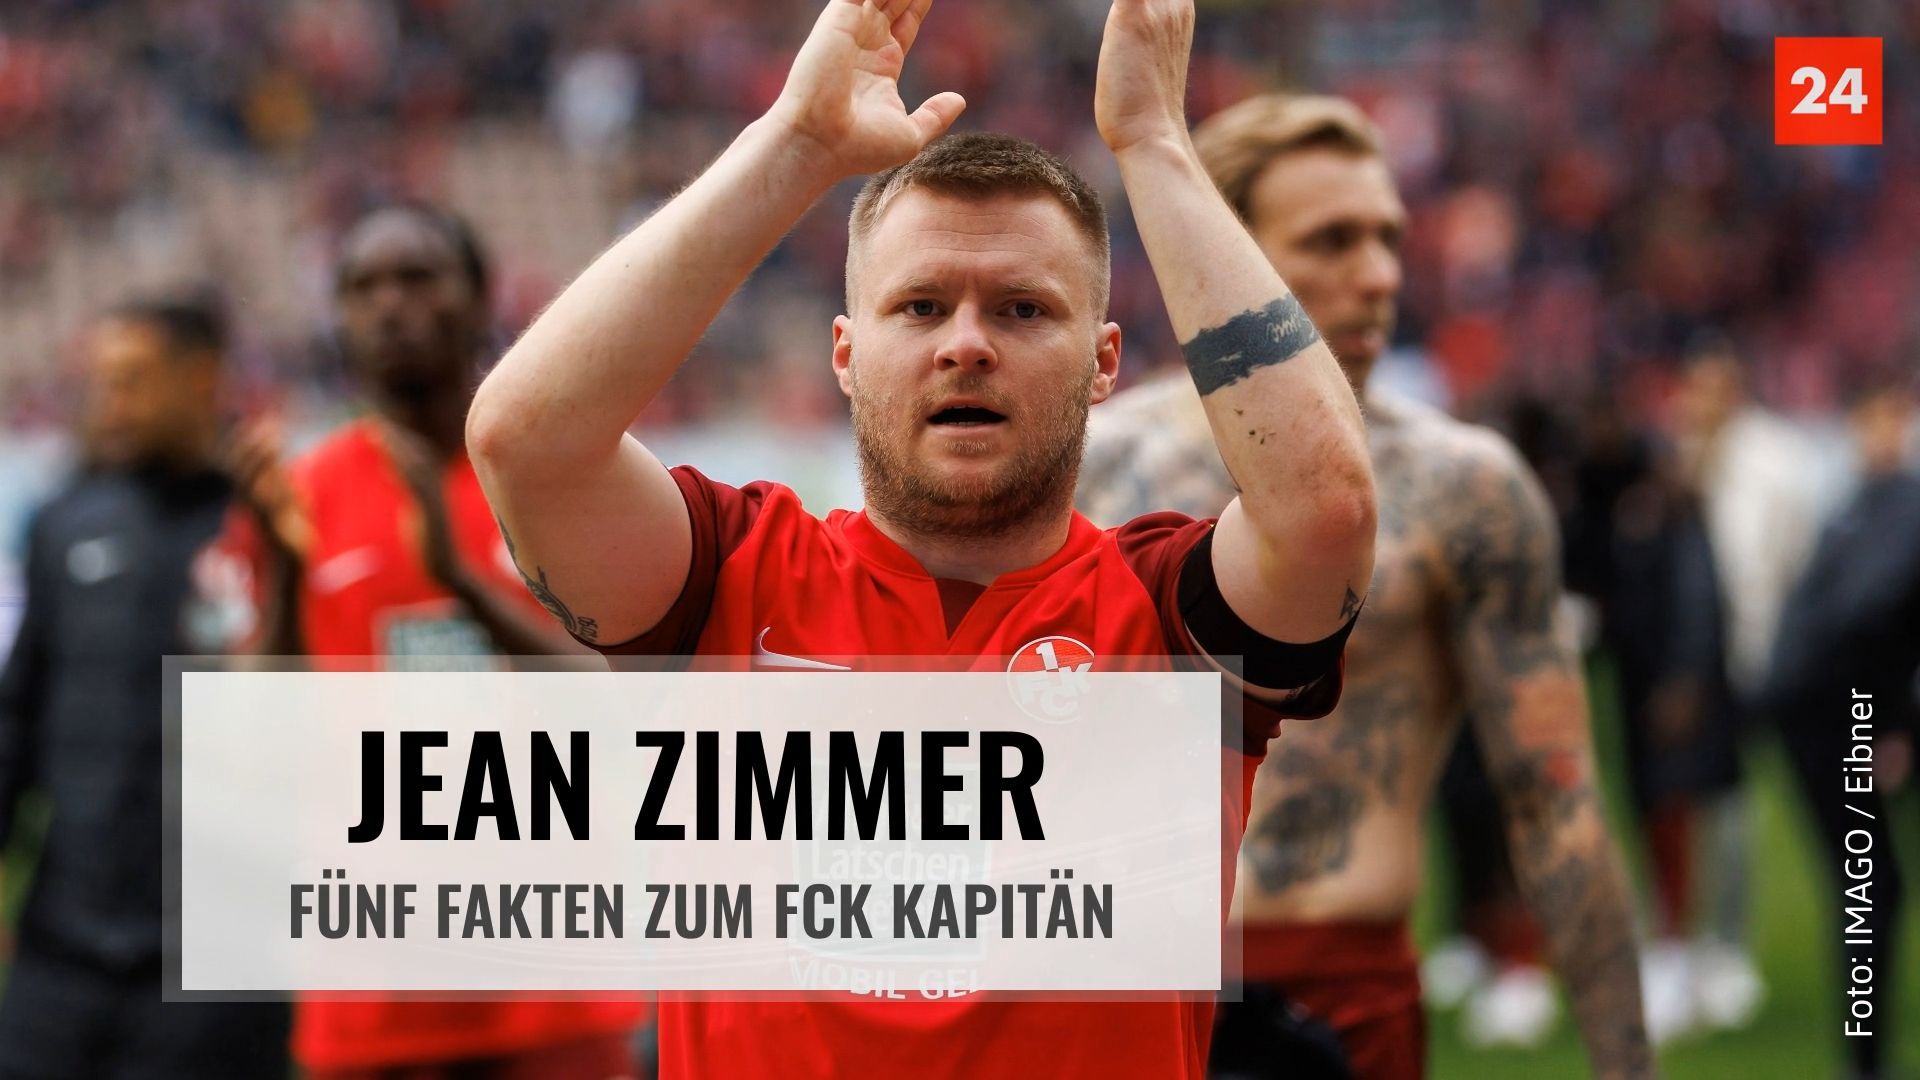 Jean Zimmer – Fünf Fakten zum FCK Kapitän